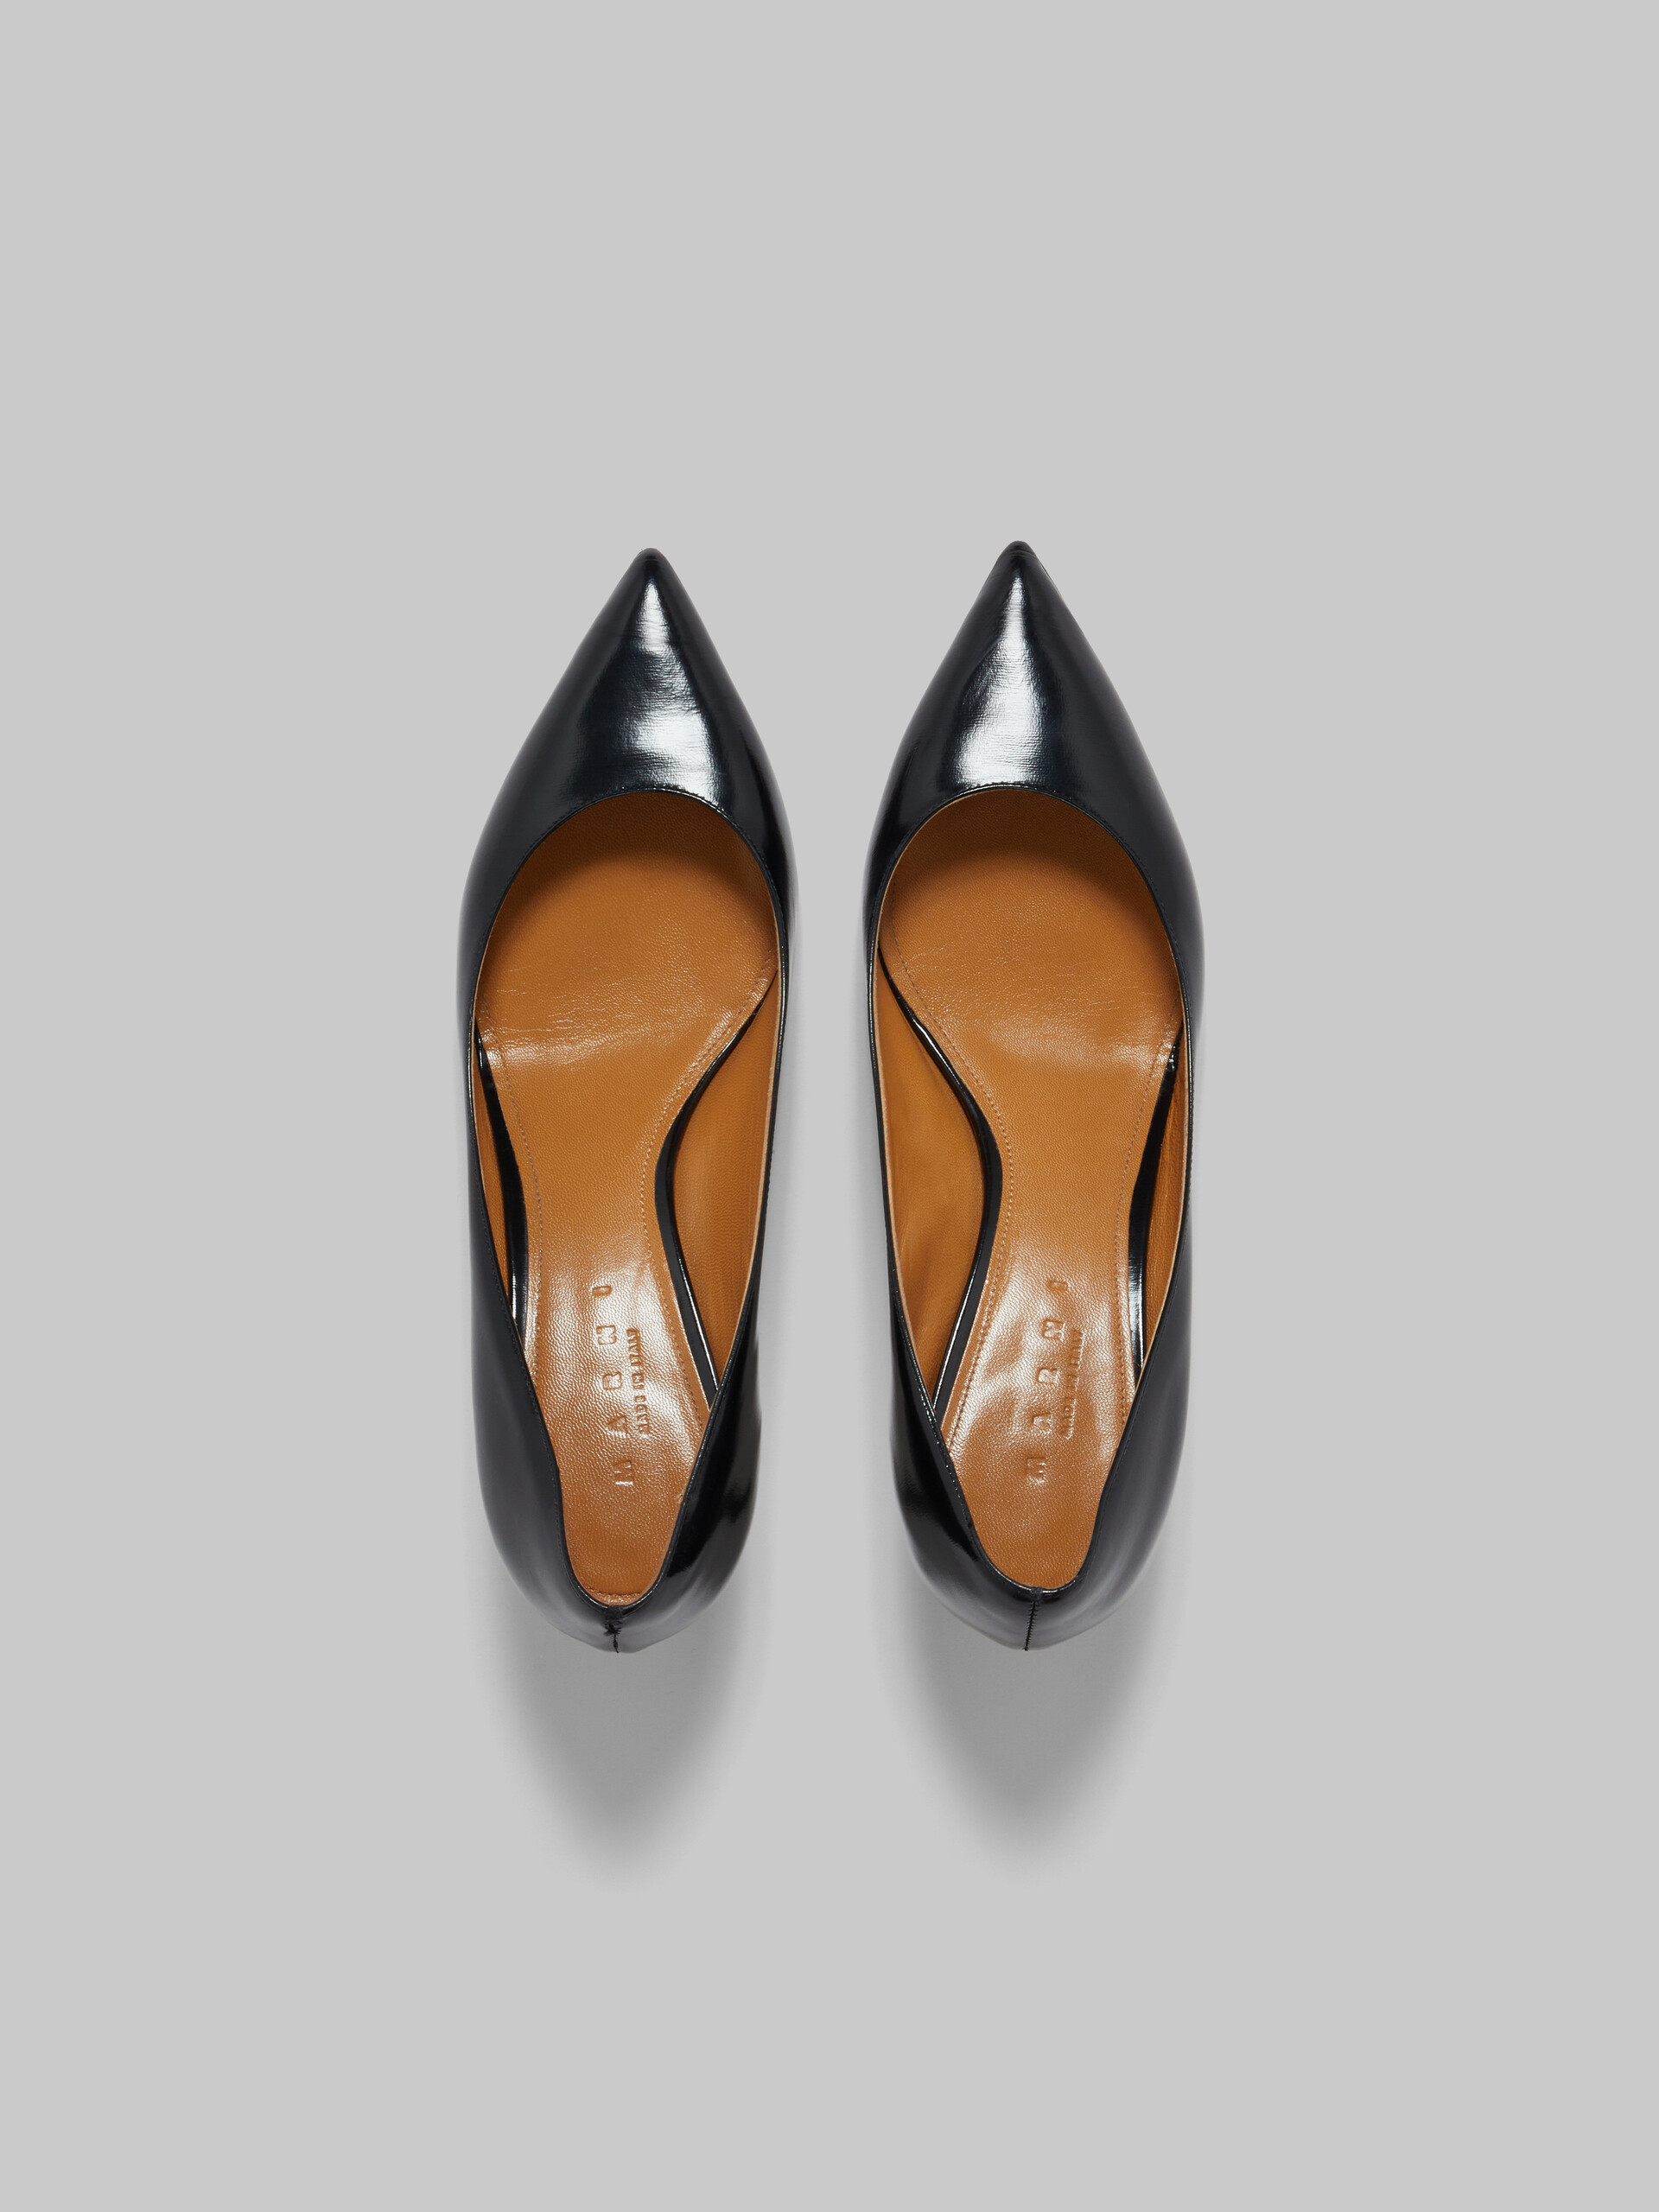 Zapato de salón Rhythm de piel estilo palmellato negra - Salones - Image 4